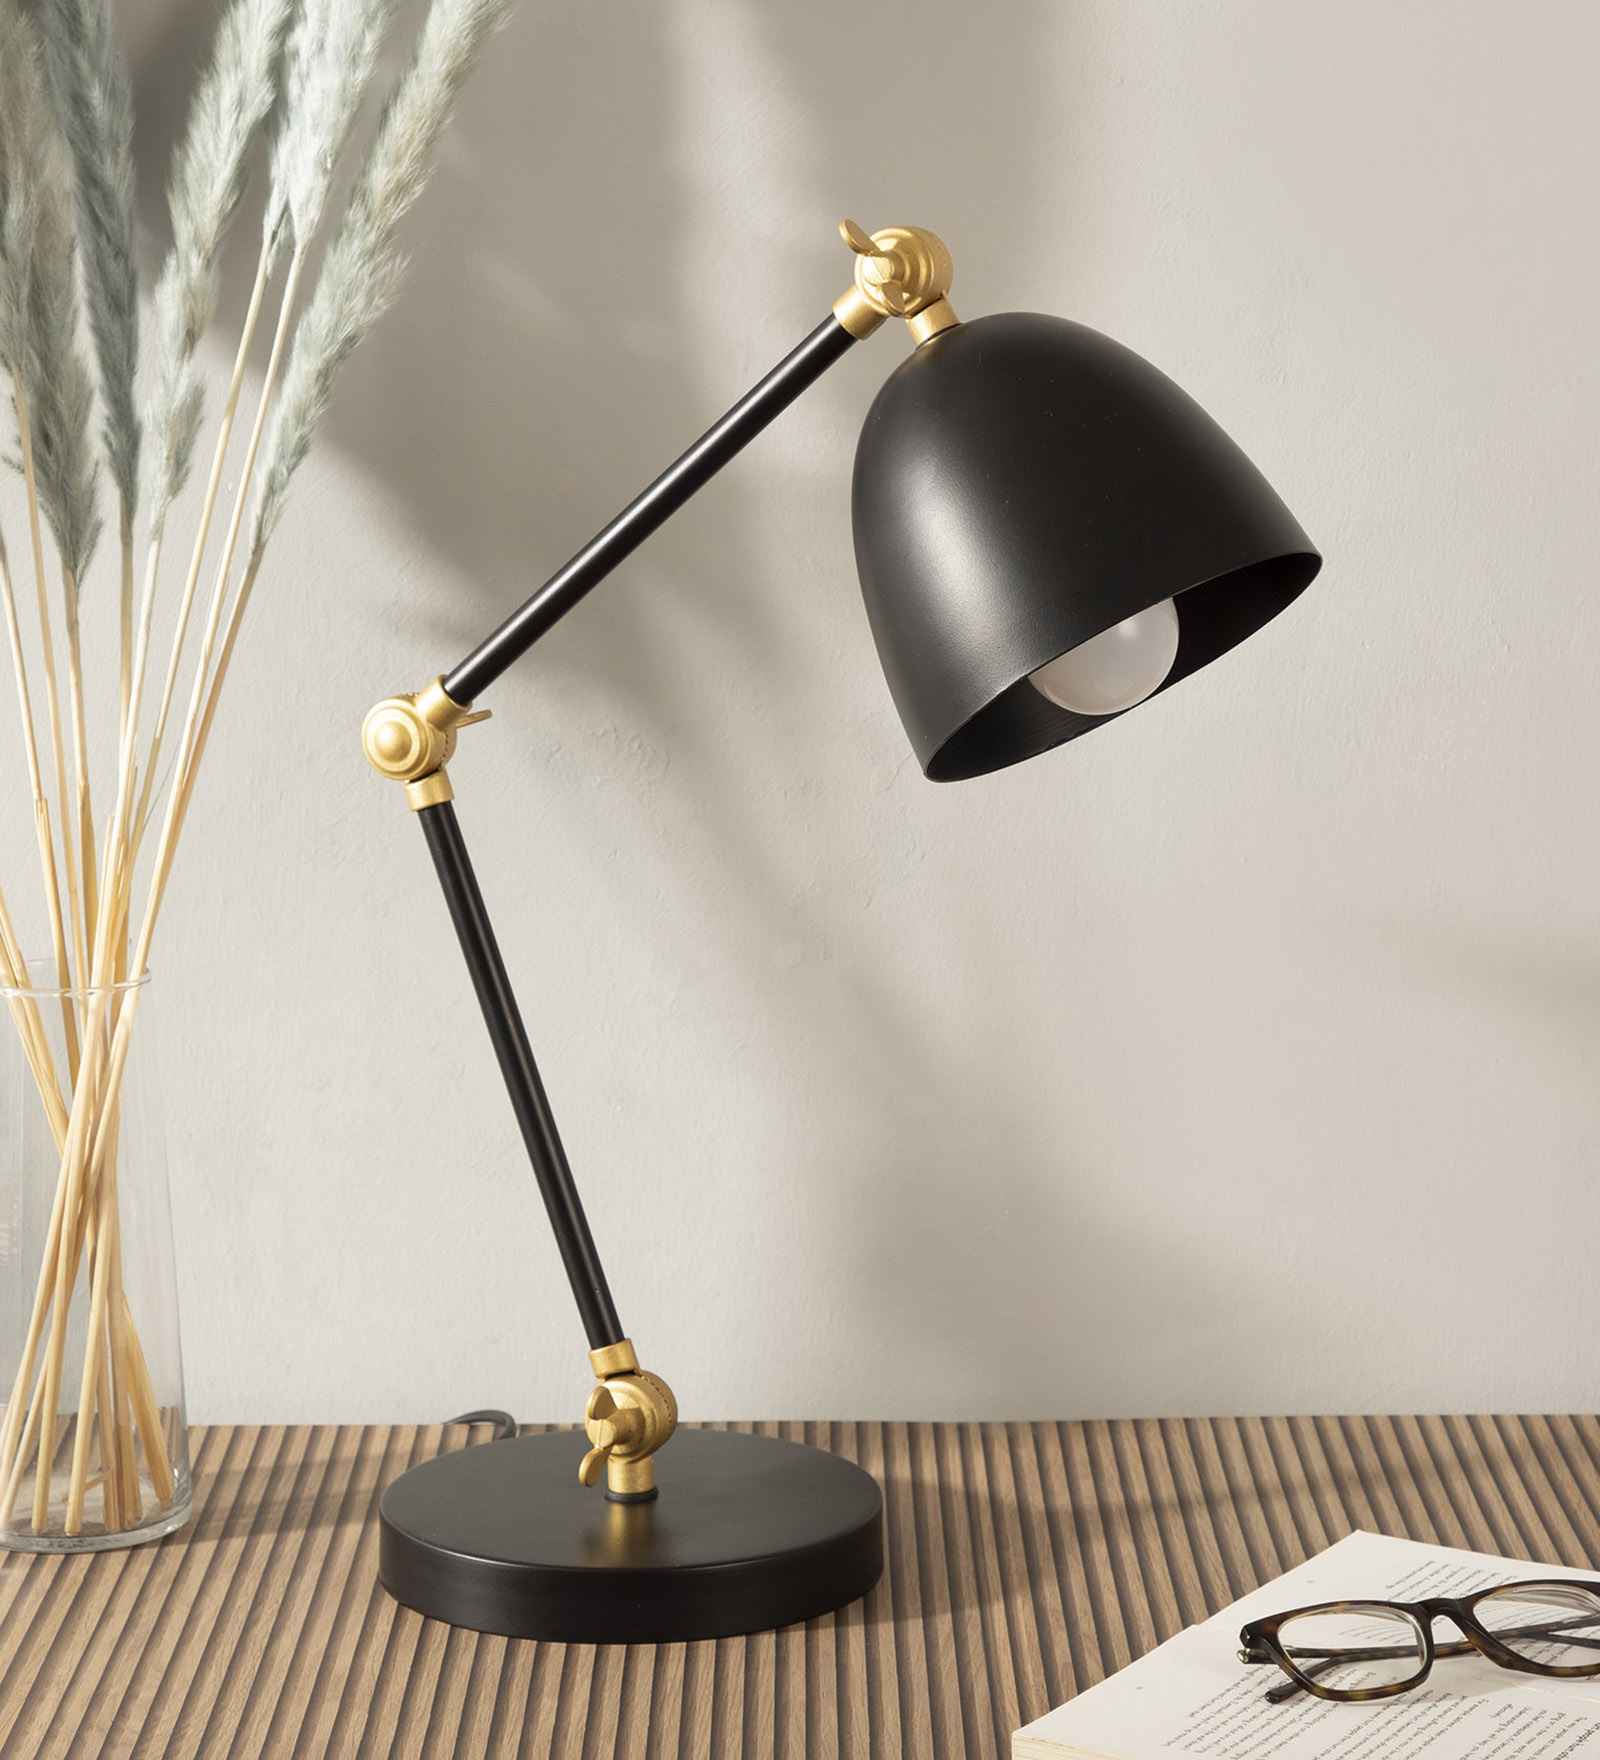 Designer Study Lamp With Metal Base